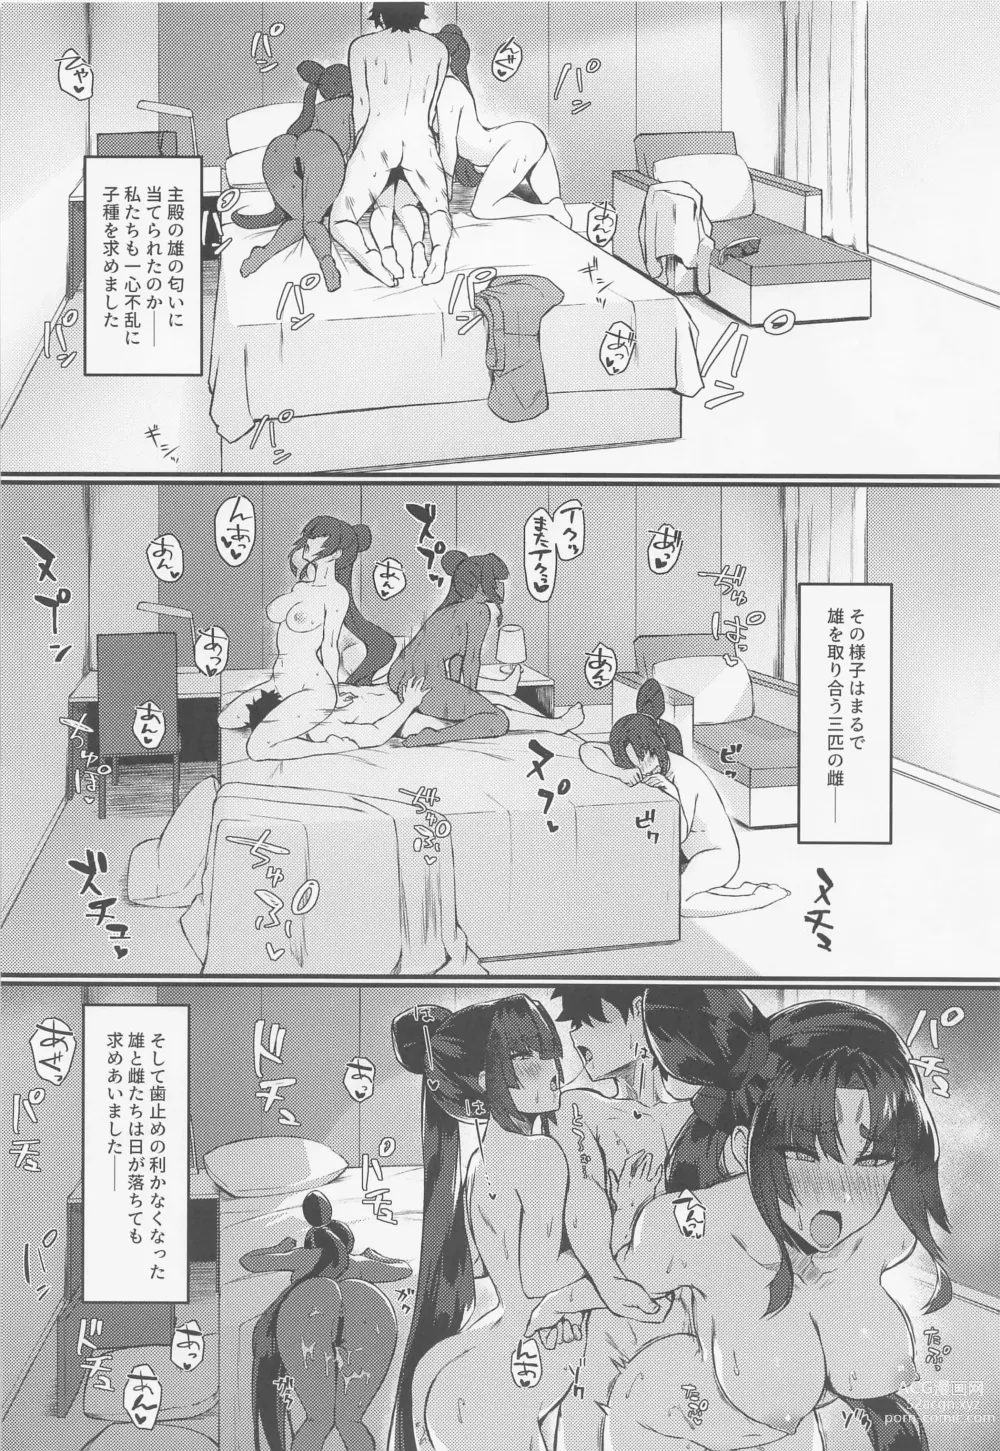 Page 23 of doujinshi Ushi Kurabe